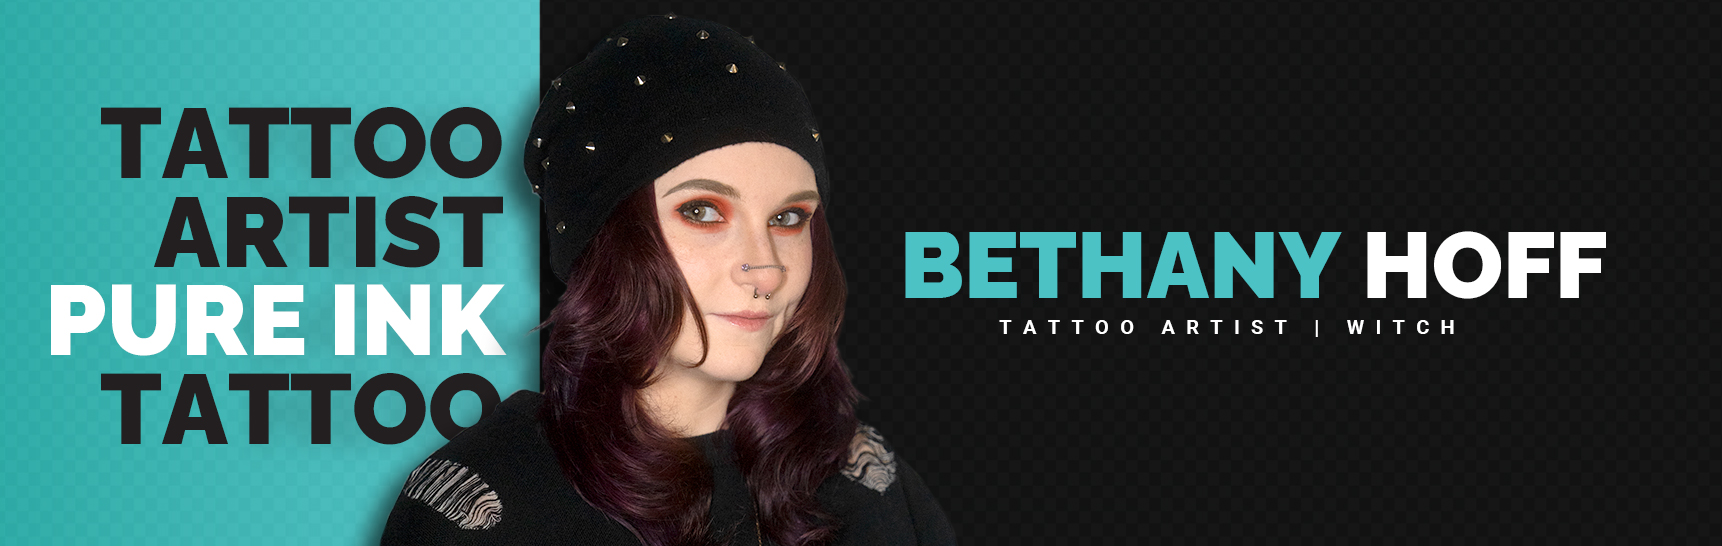 Bethany Hoff - Tattoo Artist - Witch - Pure Ink Tattoo Studio NJ